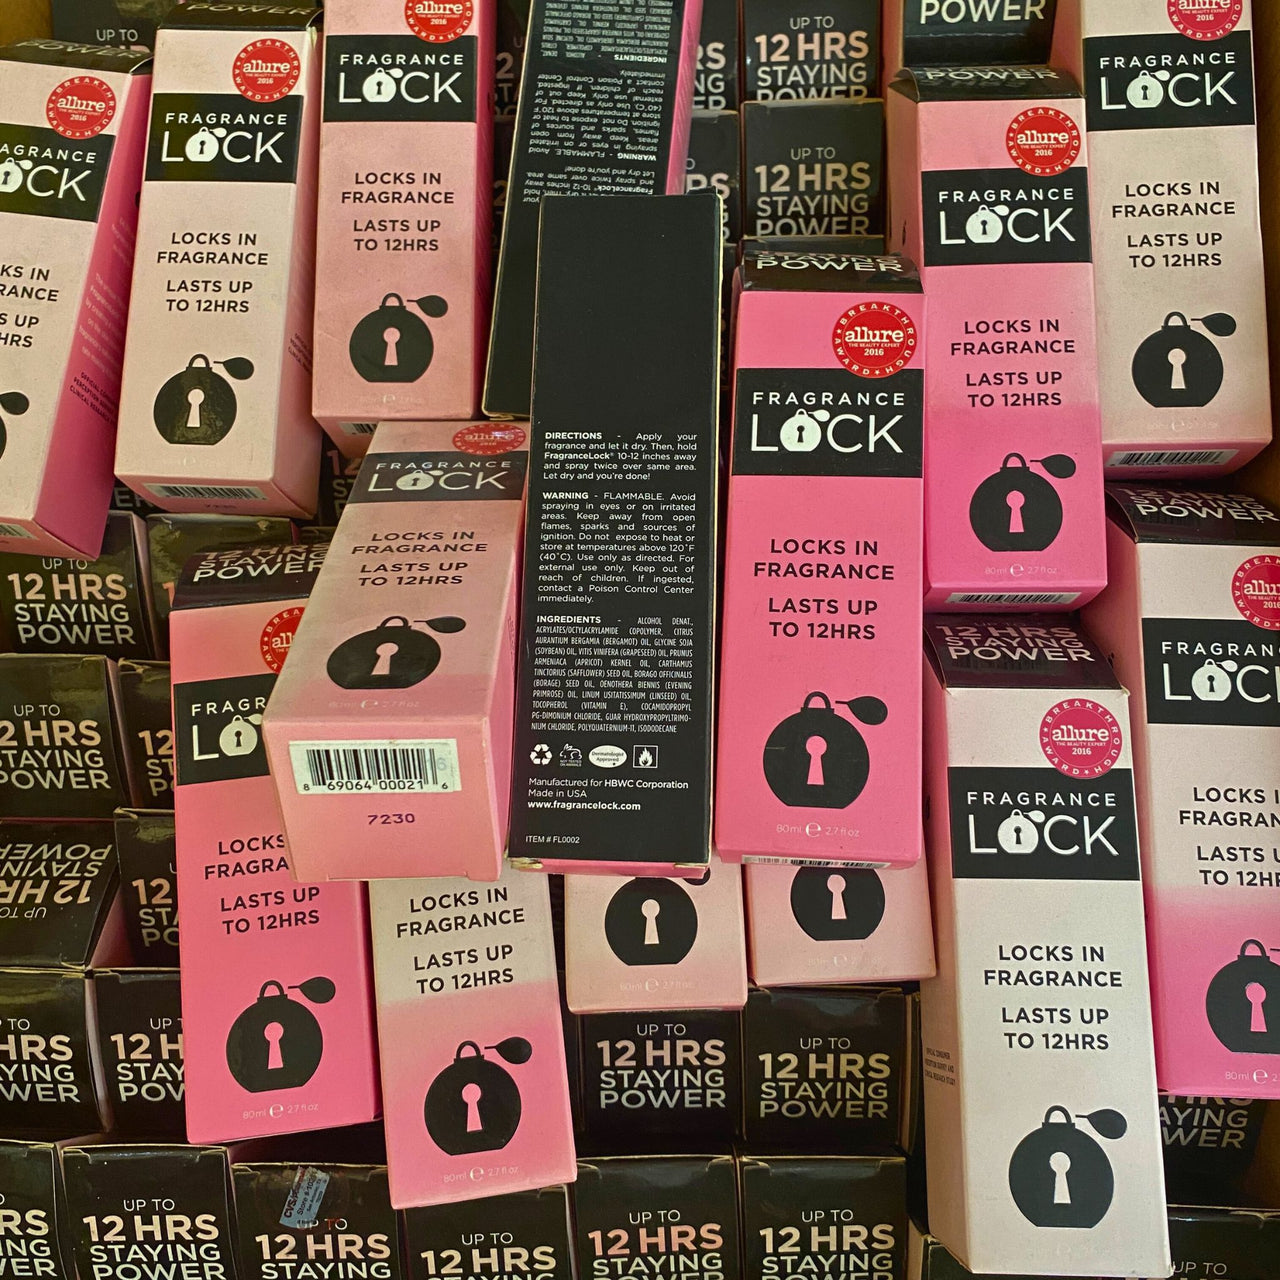 Fragrance Lock , Locks In Fragrance Lasts Up To 12HRS